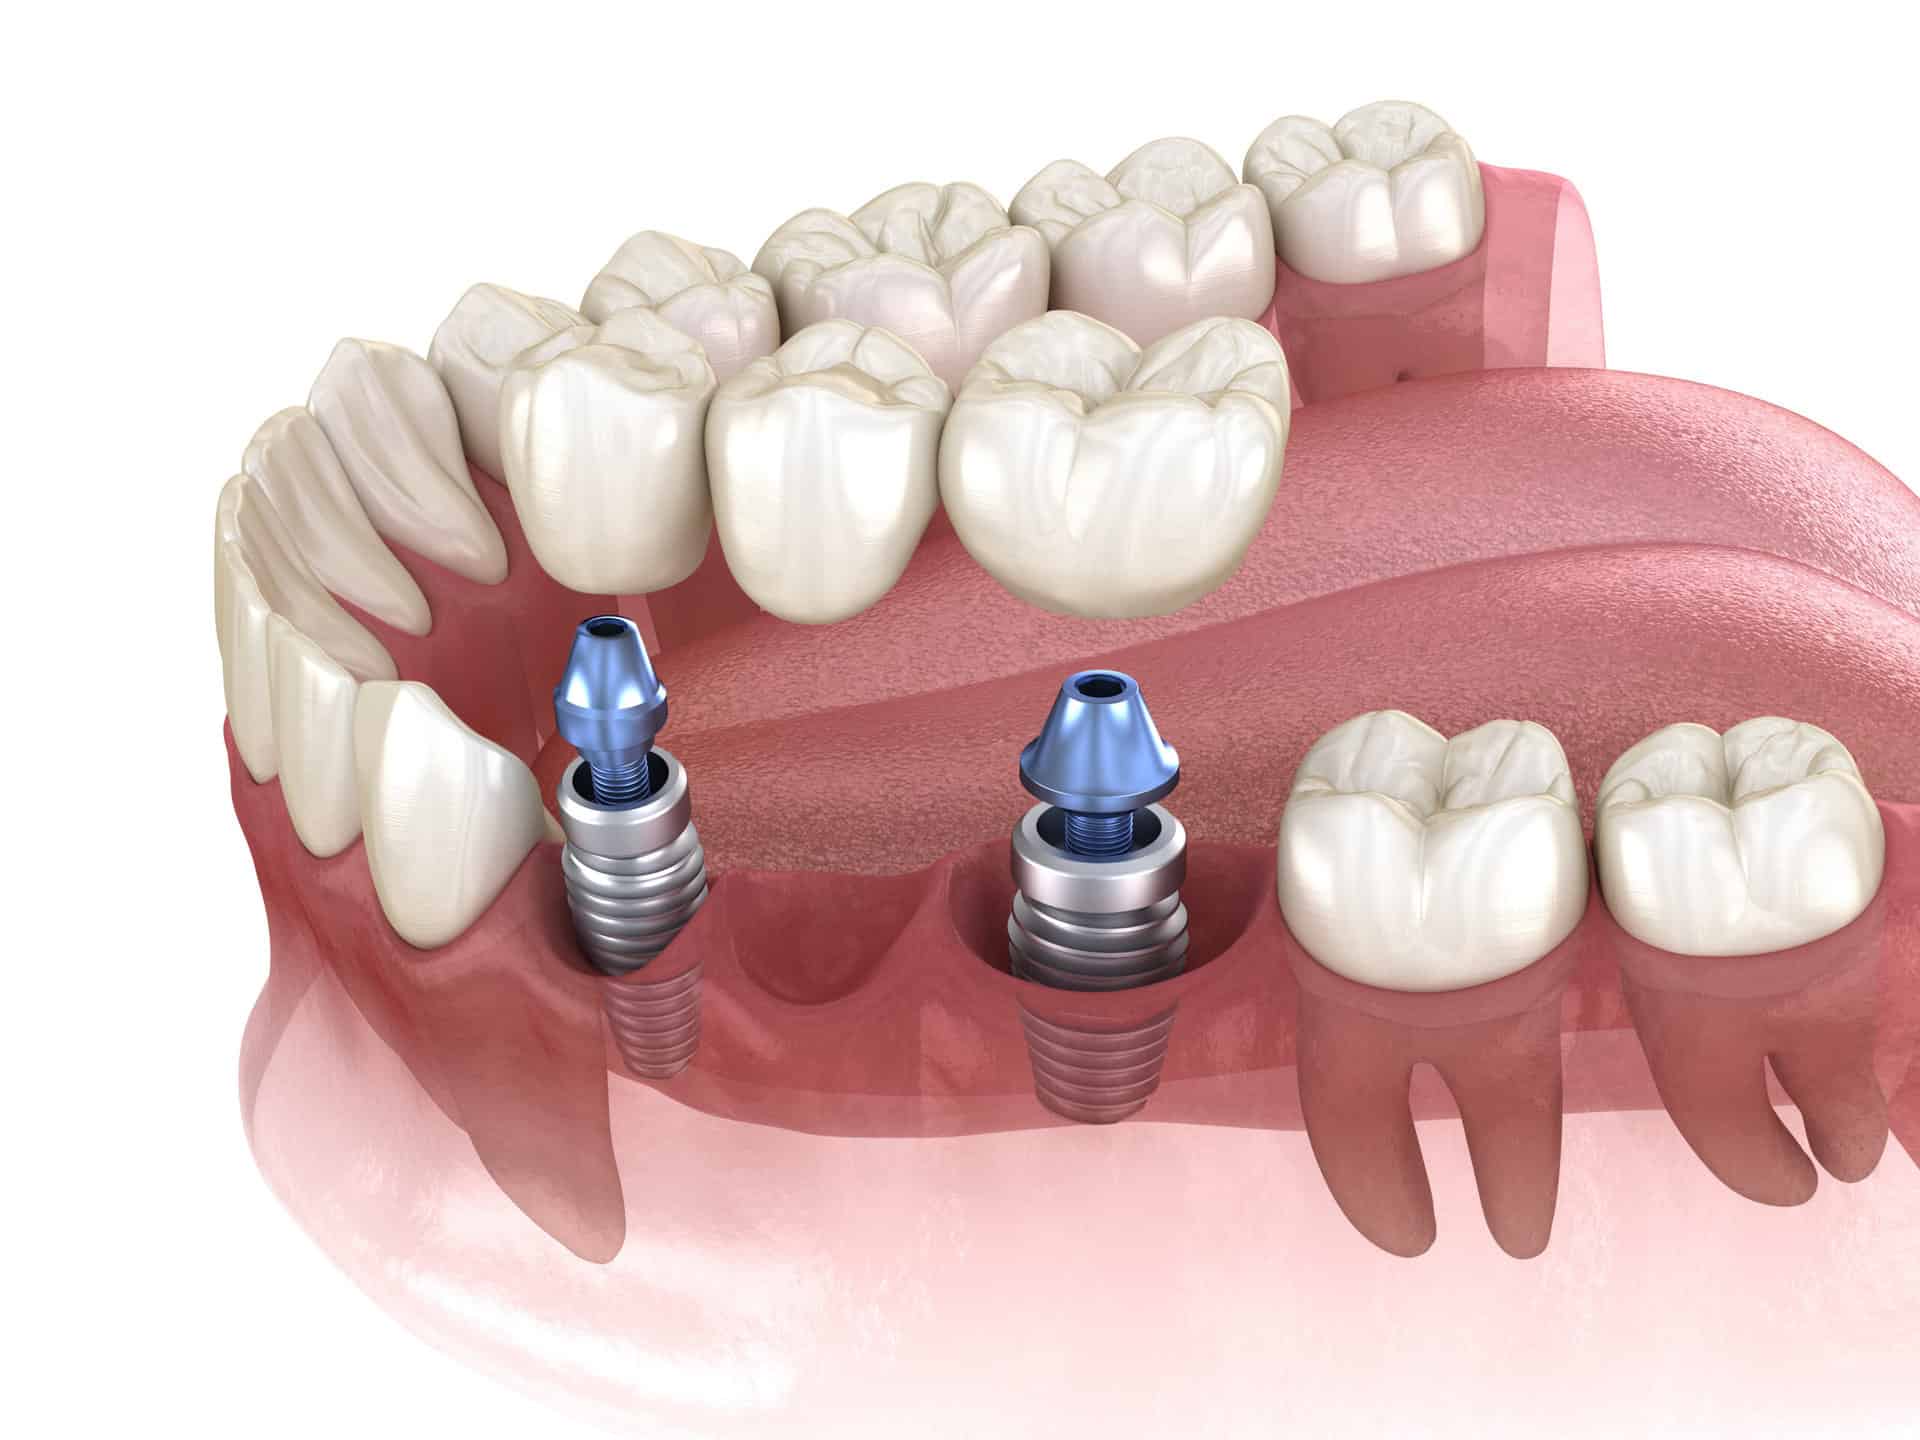 Coronas dentales sobre diente e implante